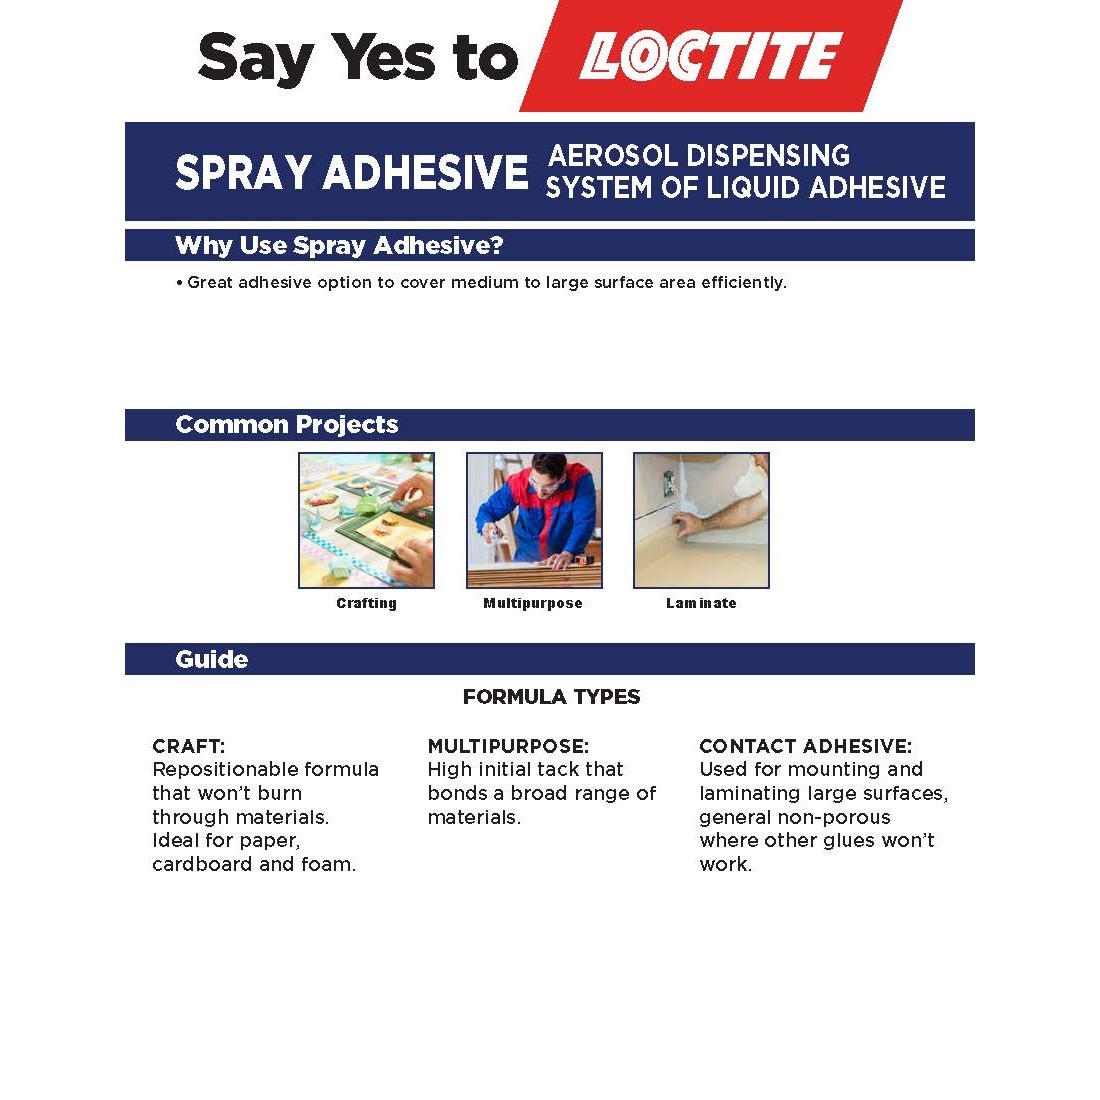 LOCTITE Professional 13.5-oz Spray Adhesive in the Spray Adhesive